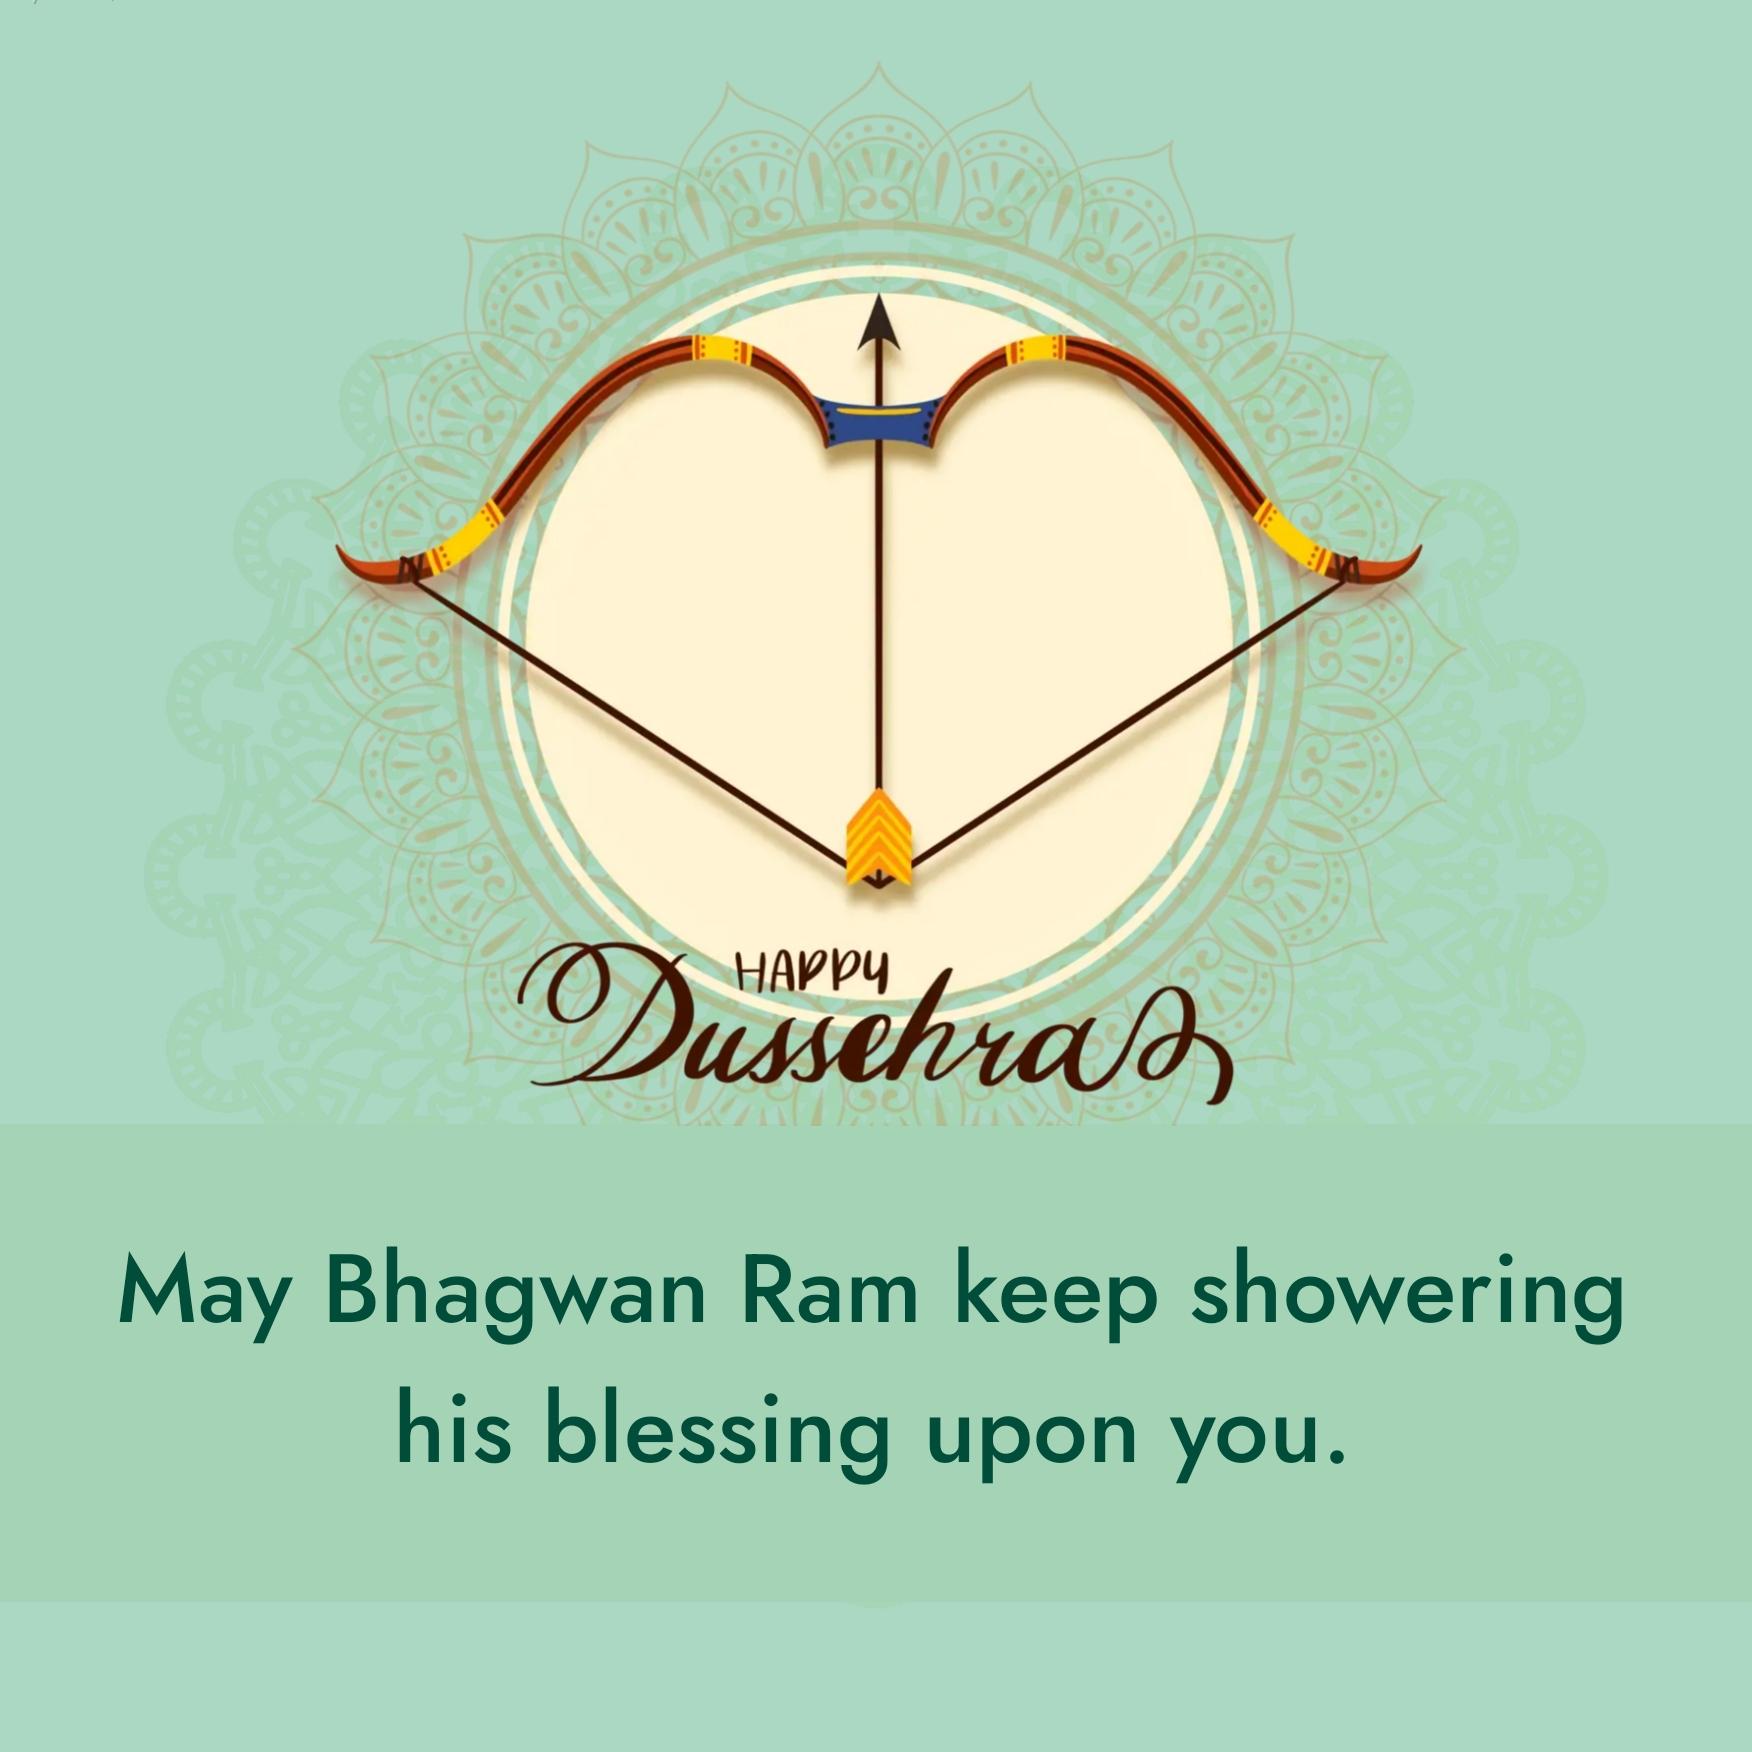 May Bhagwan Ram keep showering his blessing upon you